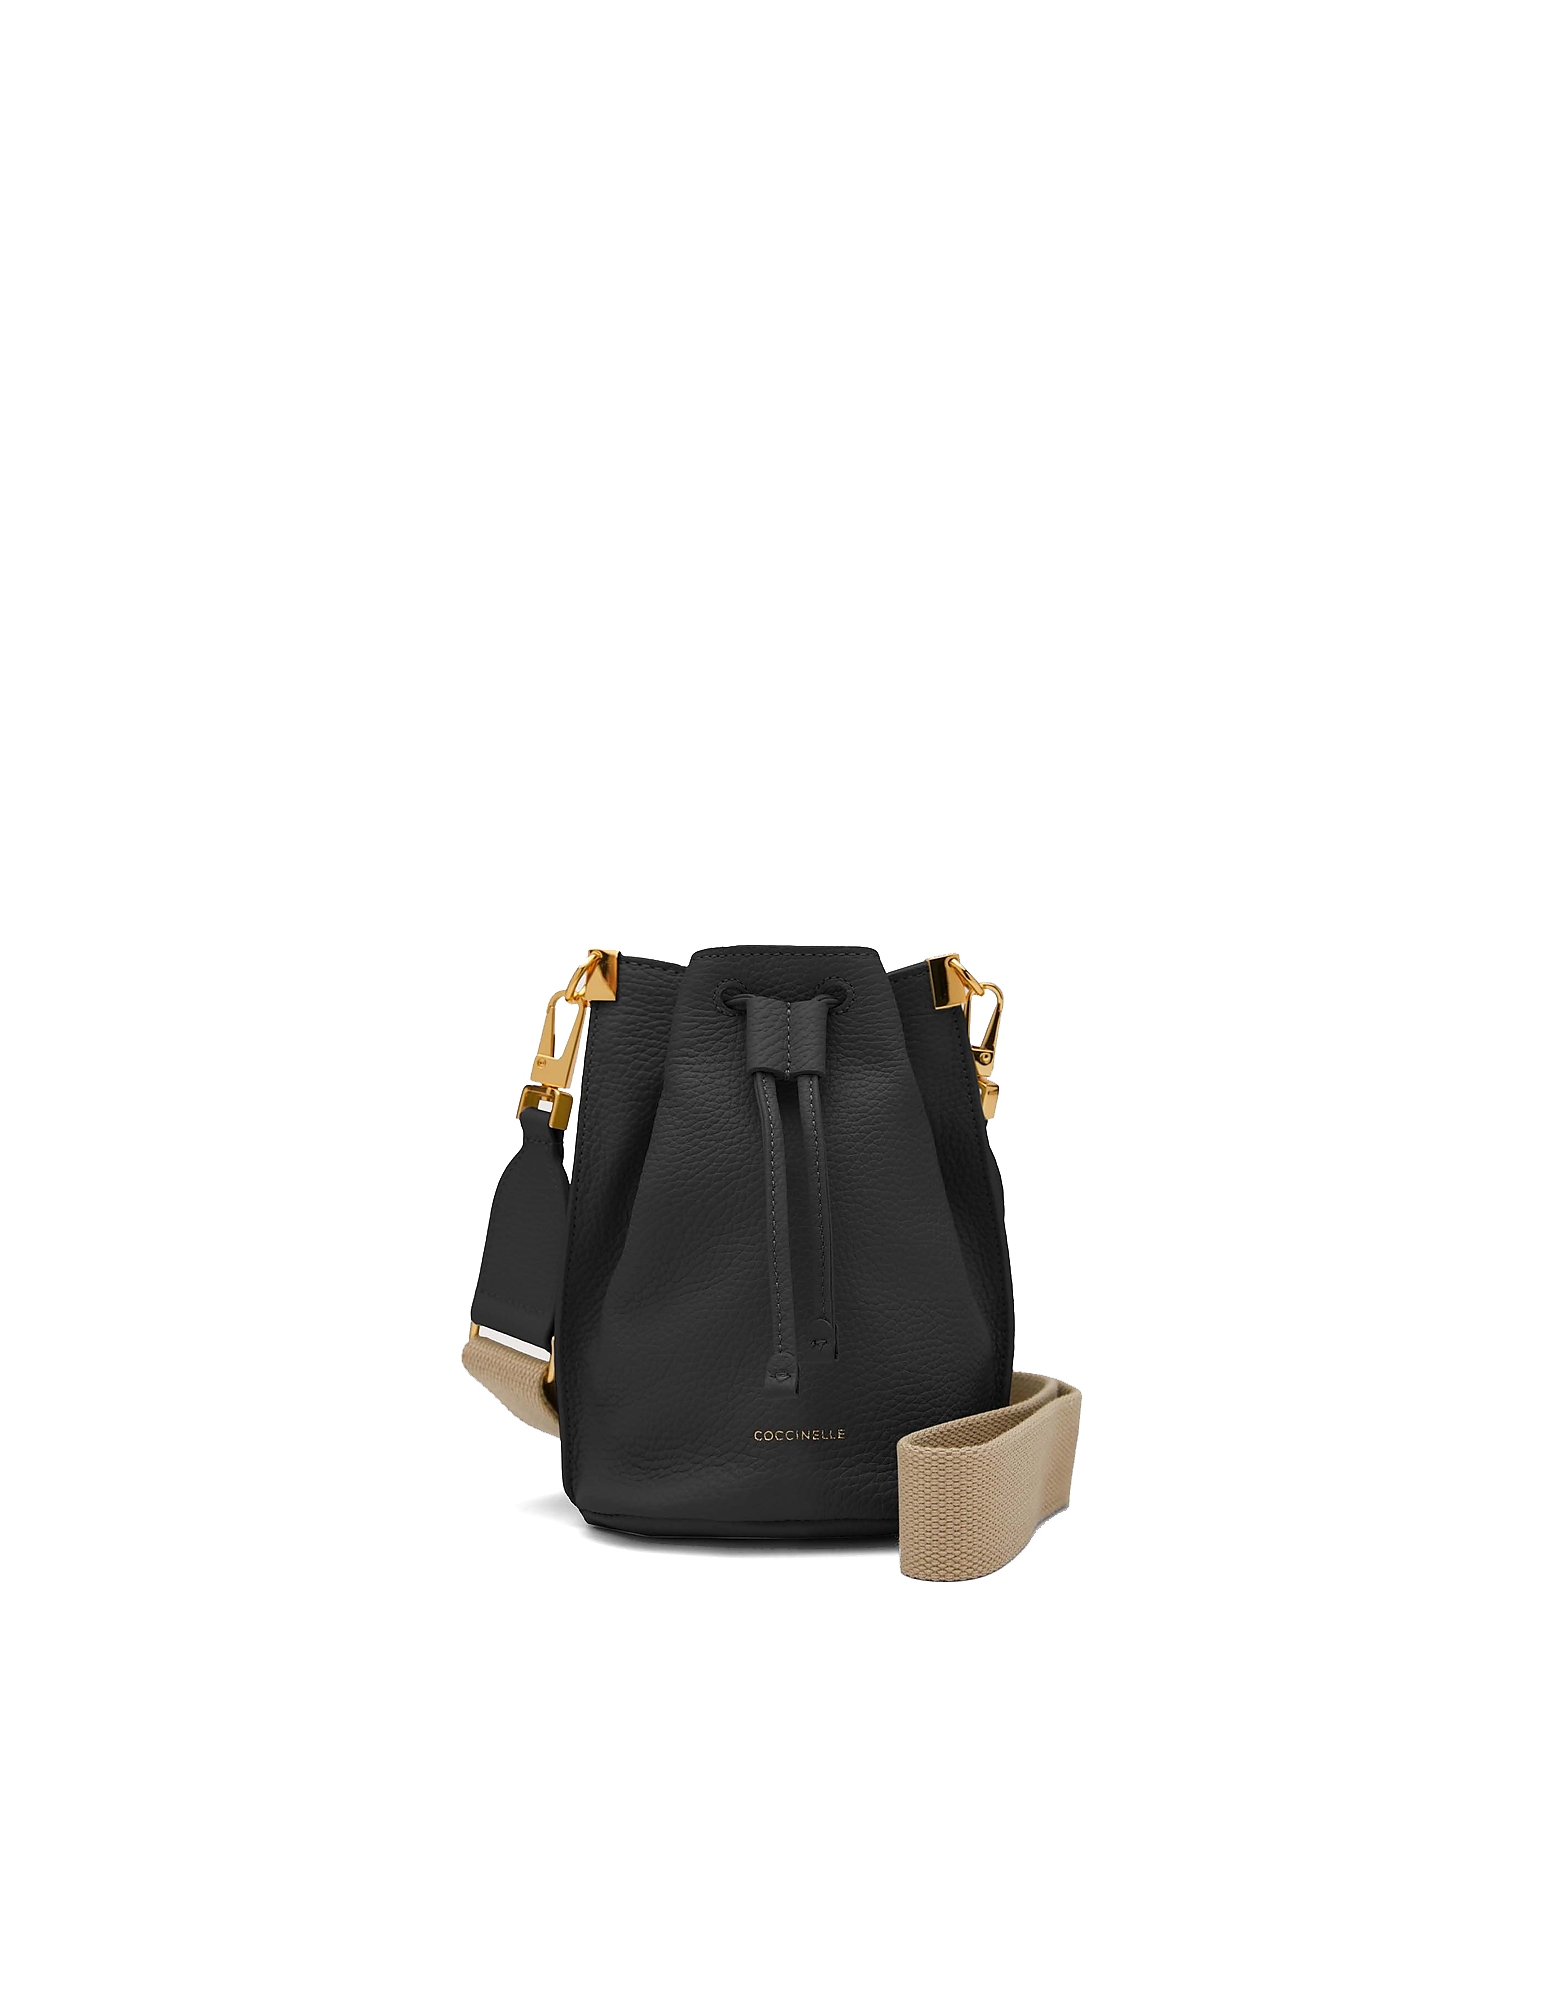 Coccinelle Designer Handbags Women's Mini Bag In Black